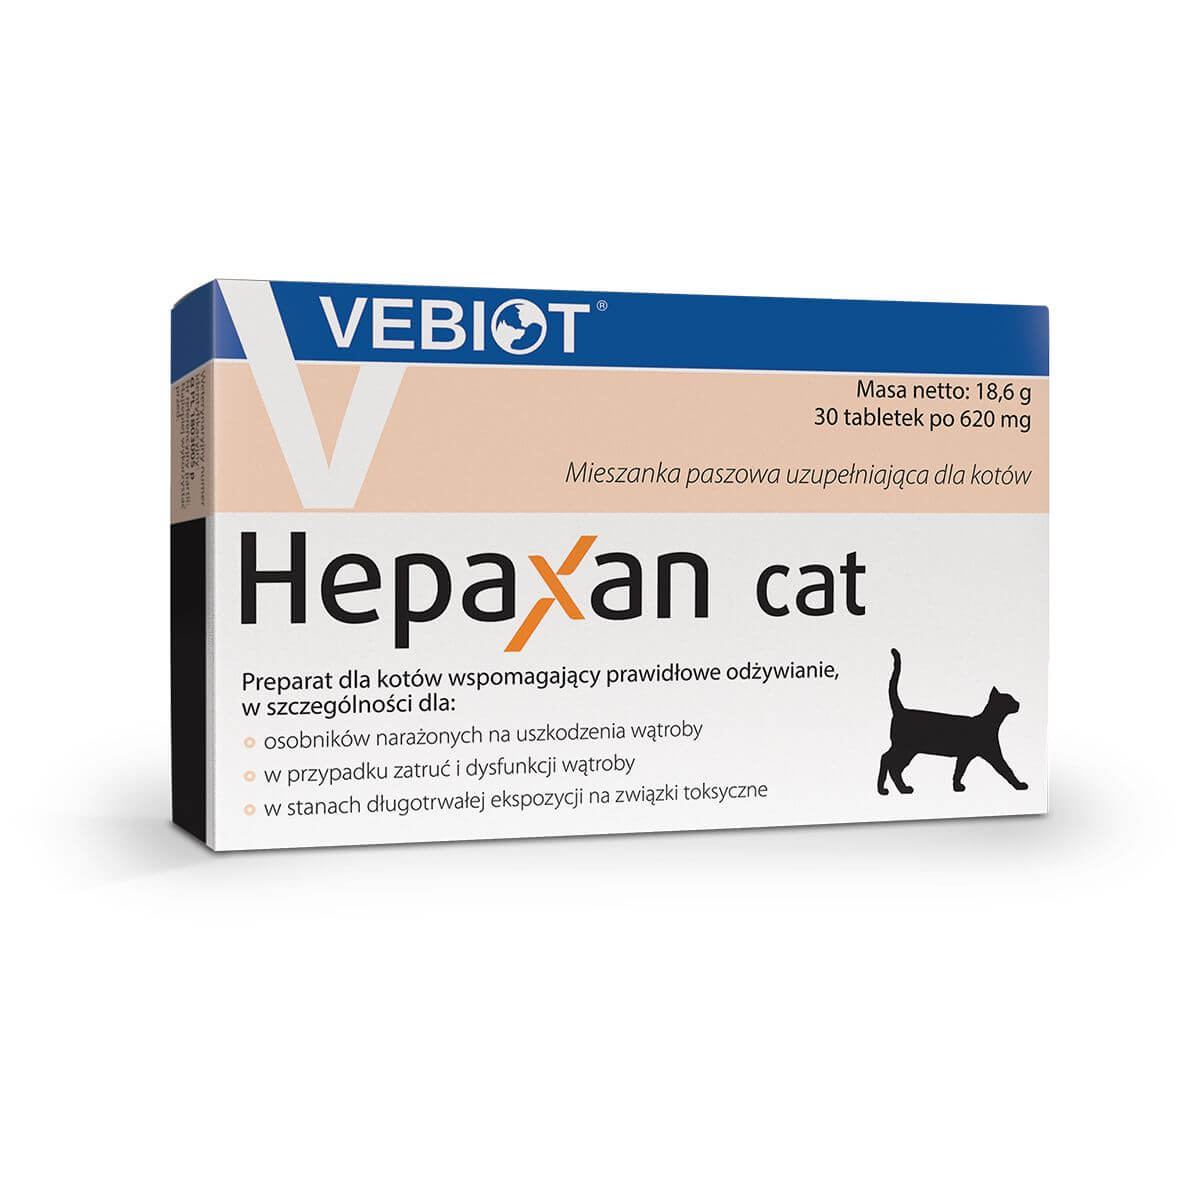 Witaminy dla kota Vebiot Hepaxan cat